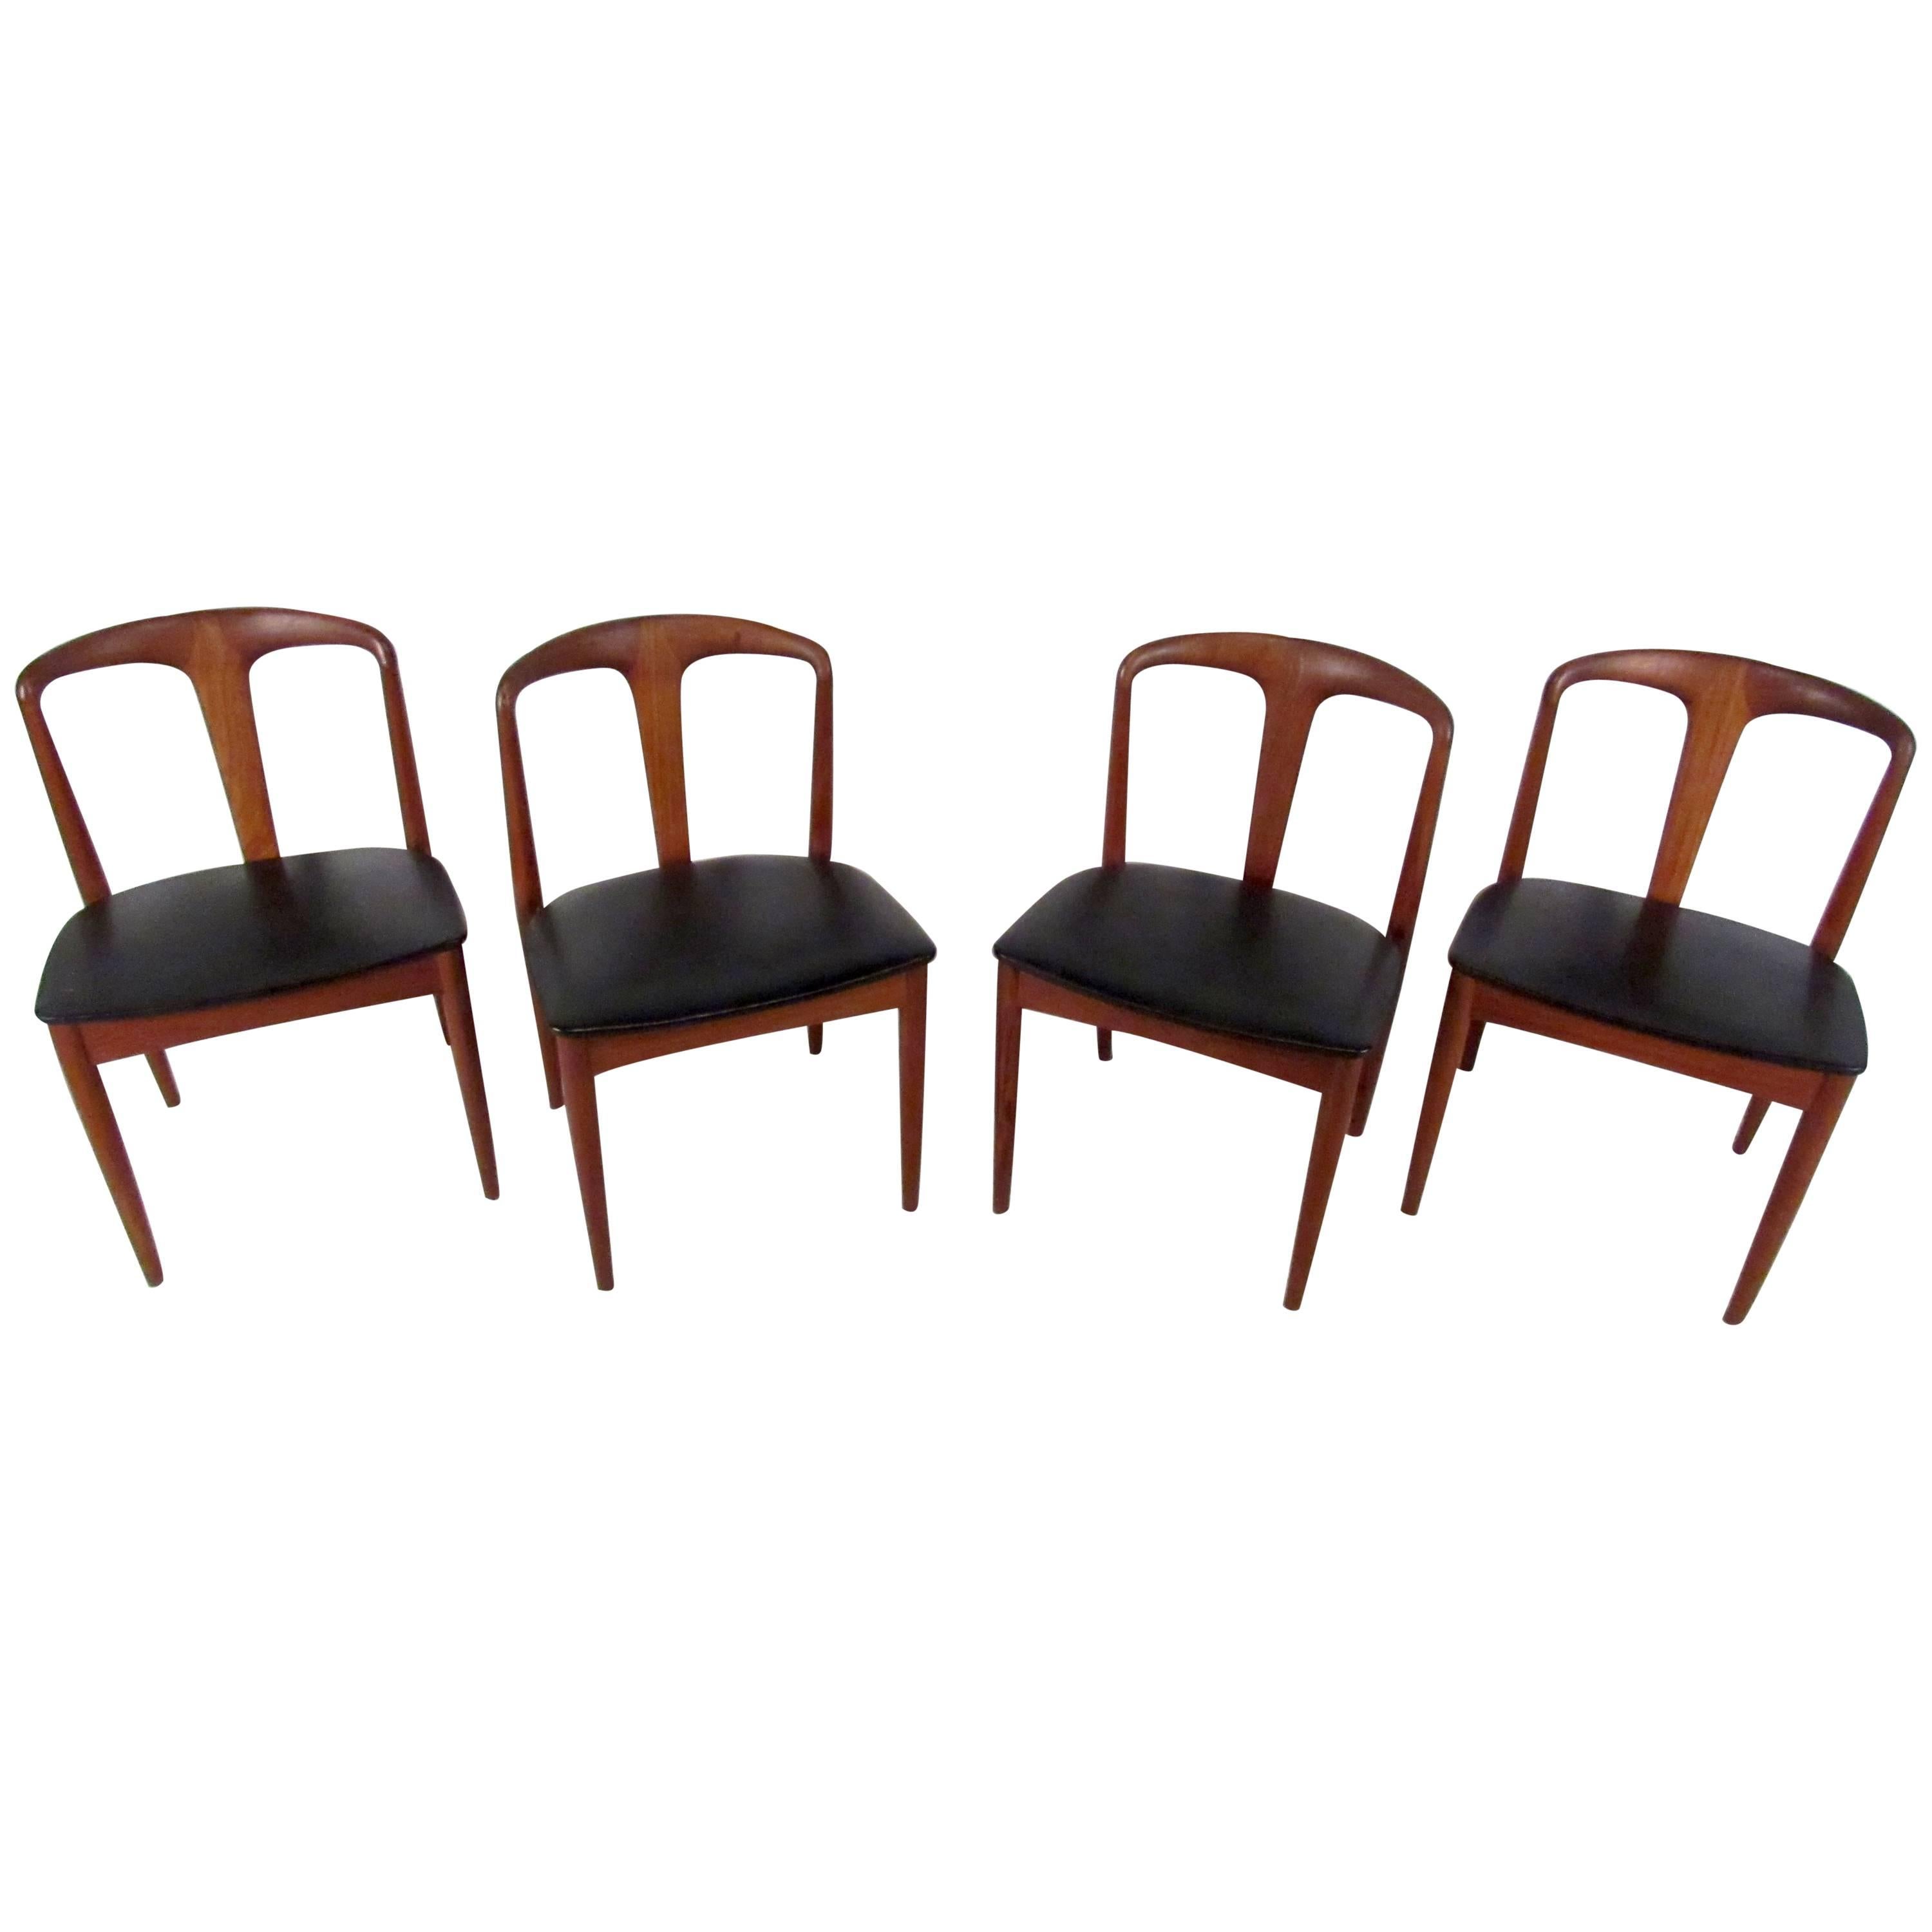 Four Mid-Century Teak Dining Chairs by Vamo Sonderborg